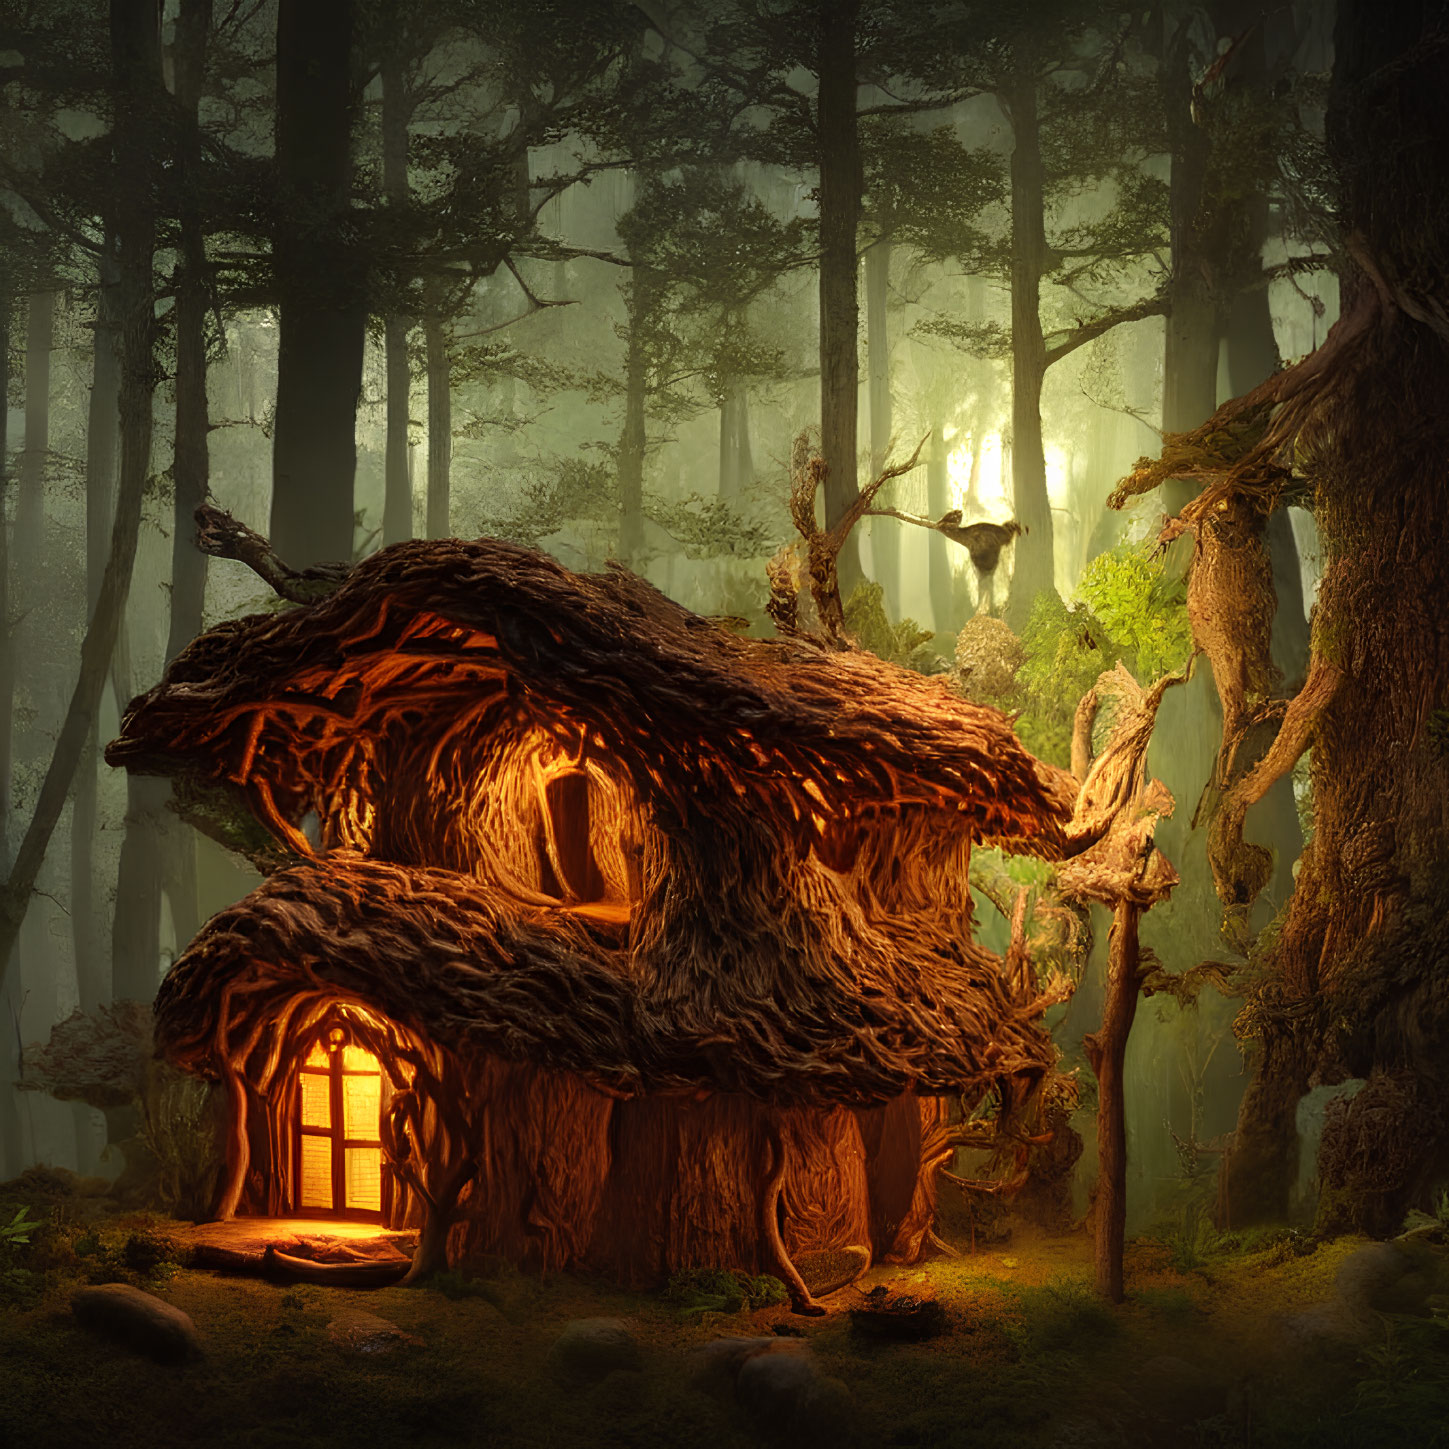 Enchanted forest scene with whimsical twisted wood house nestled among misty trees